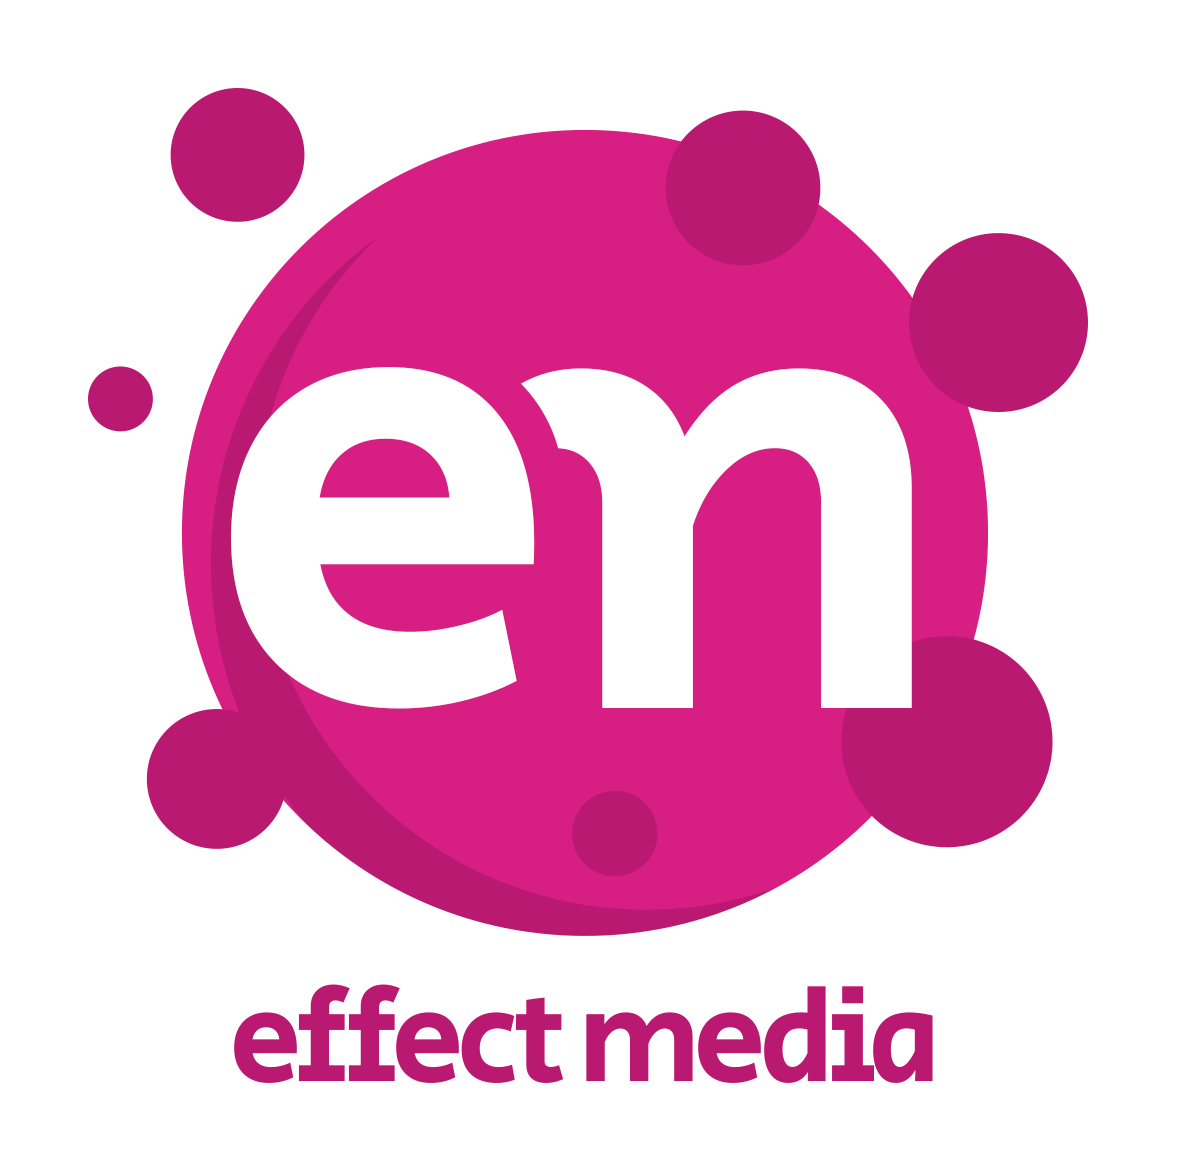 Effect Media